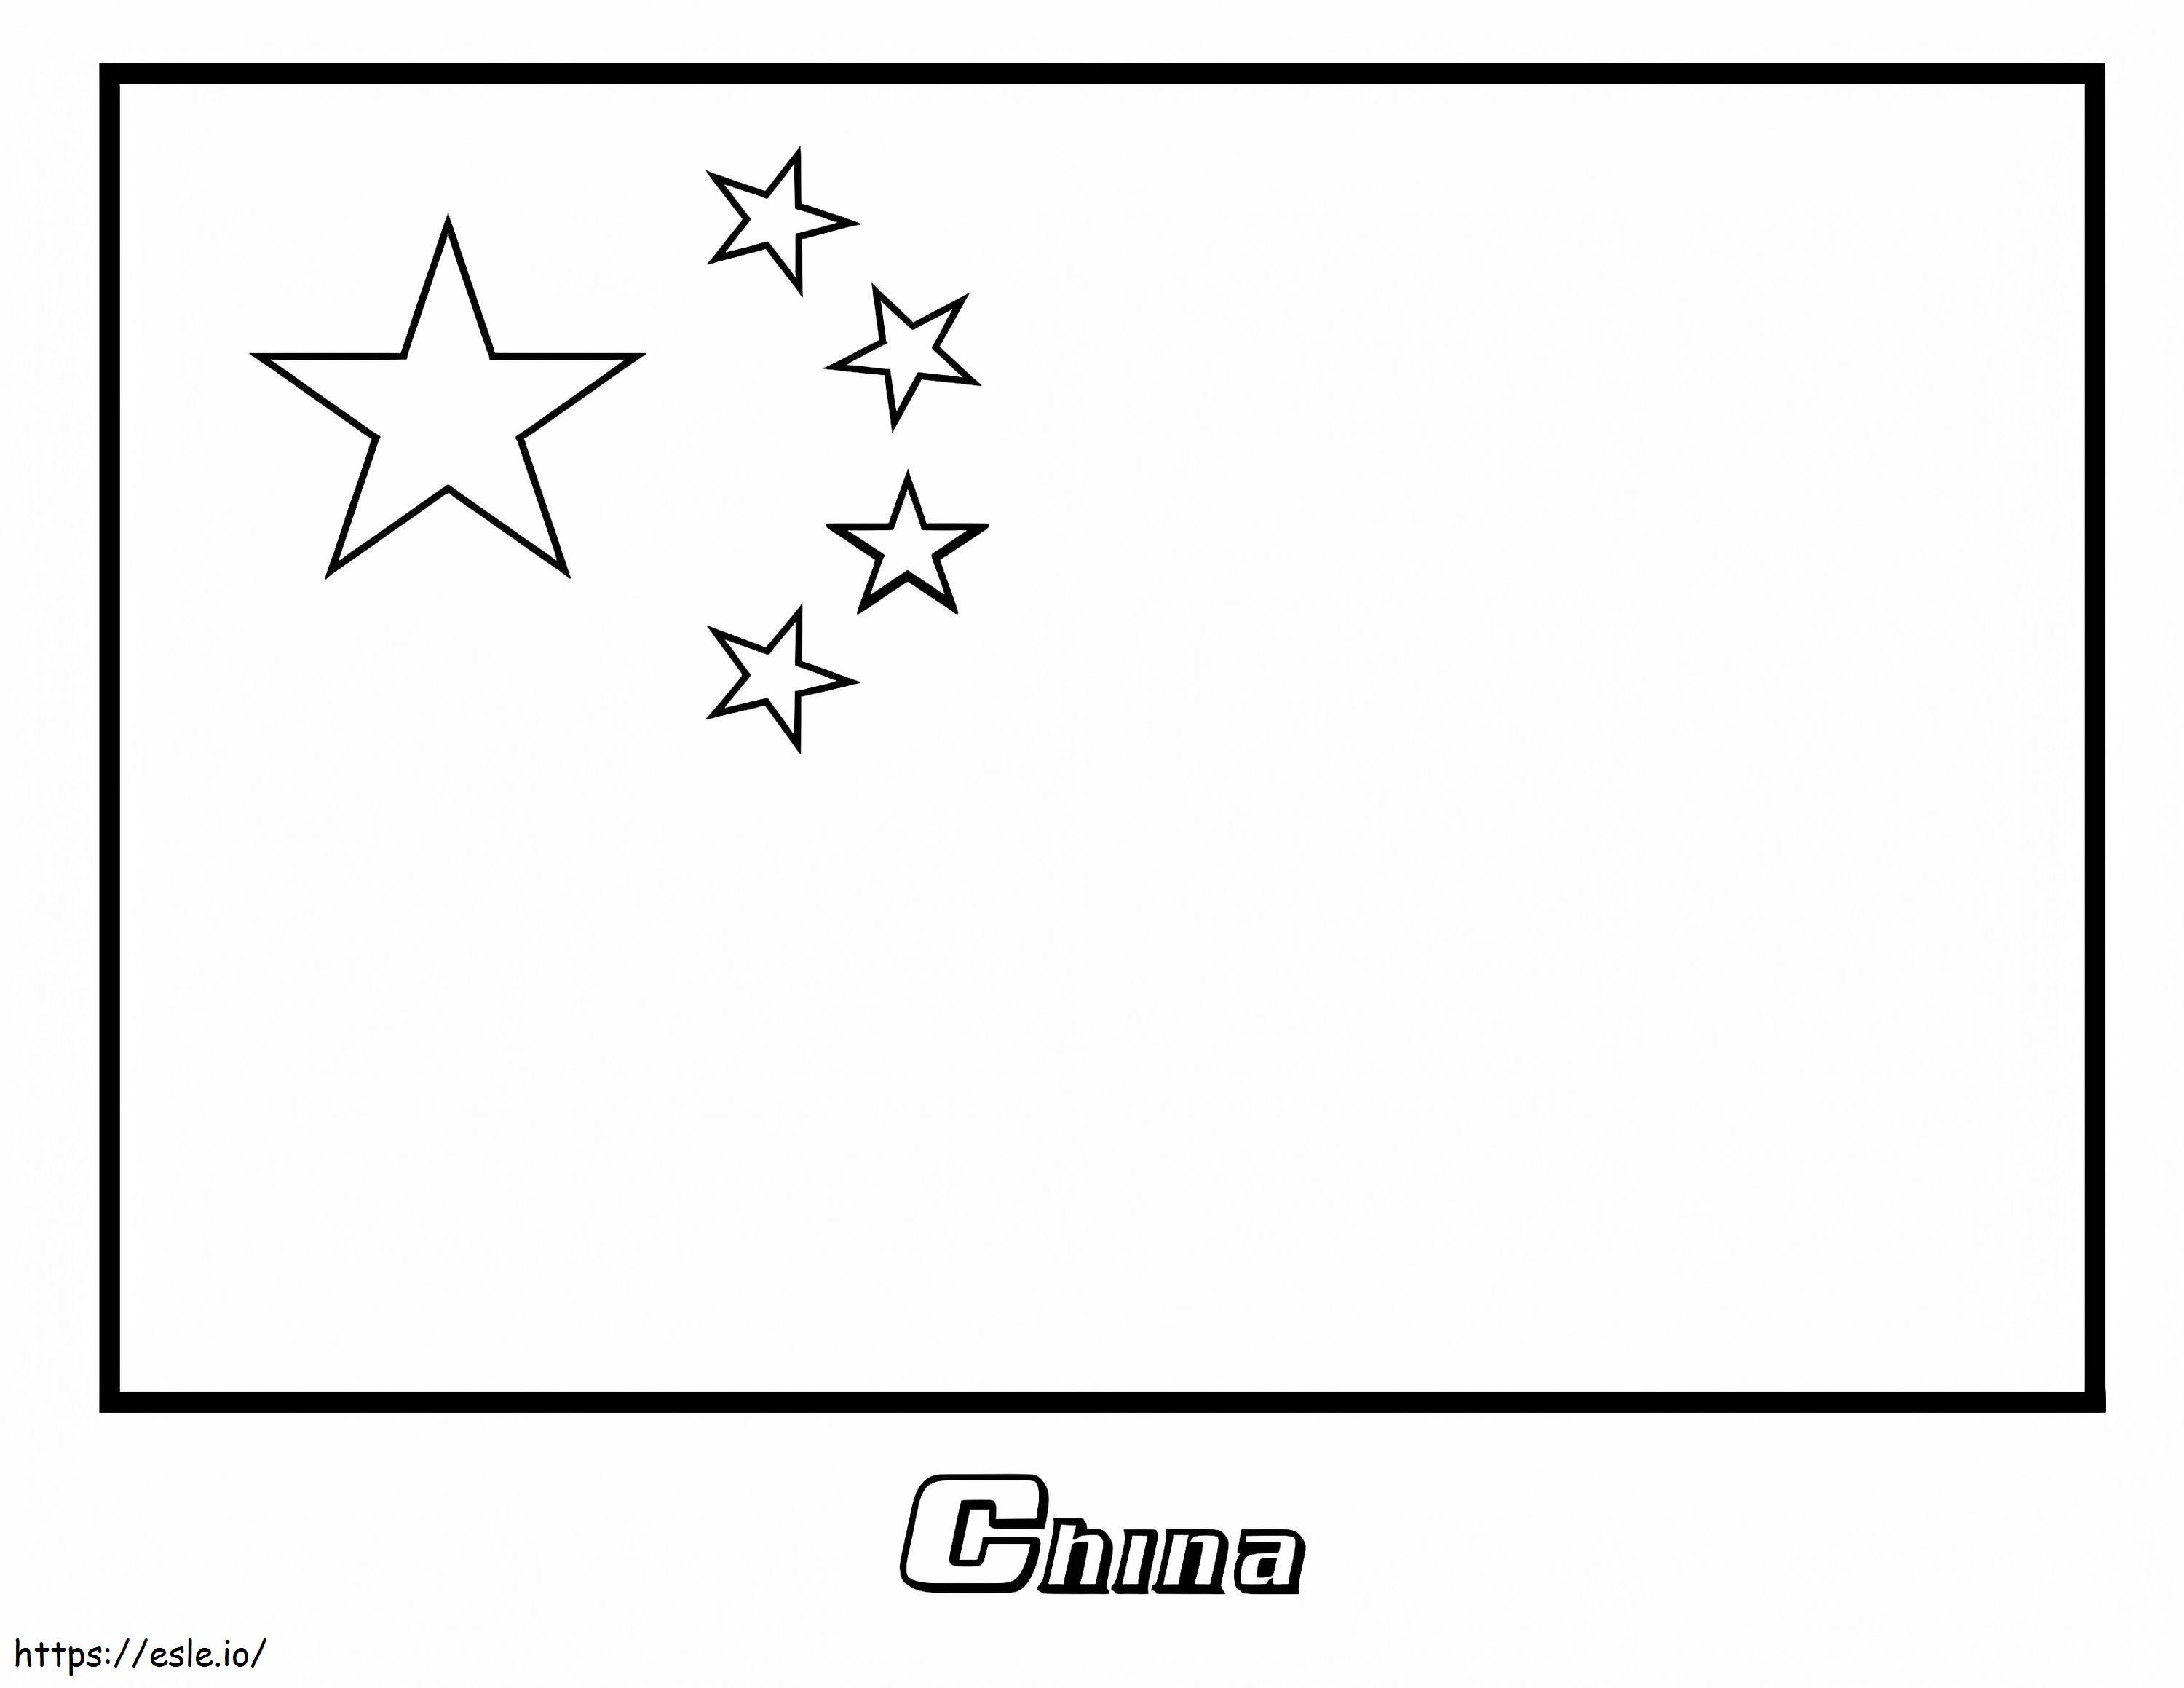 China Flag coloring page